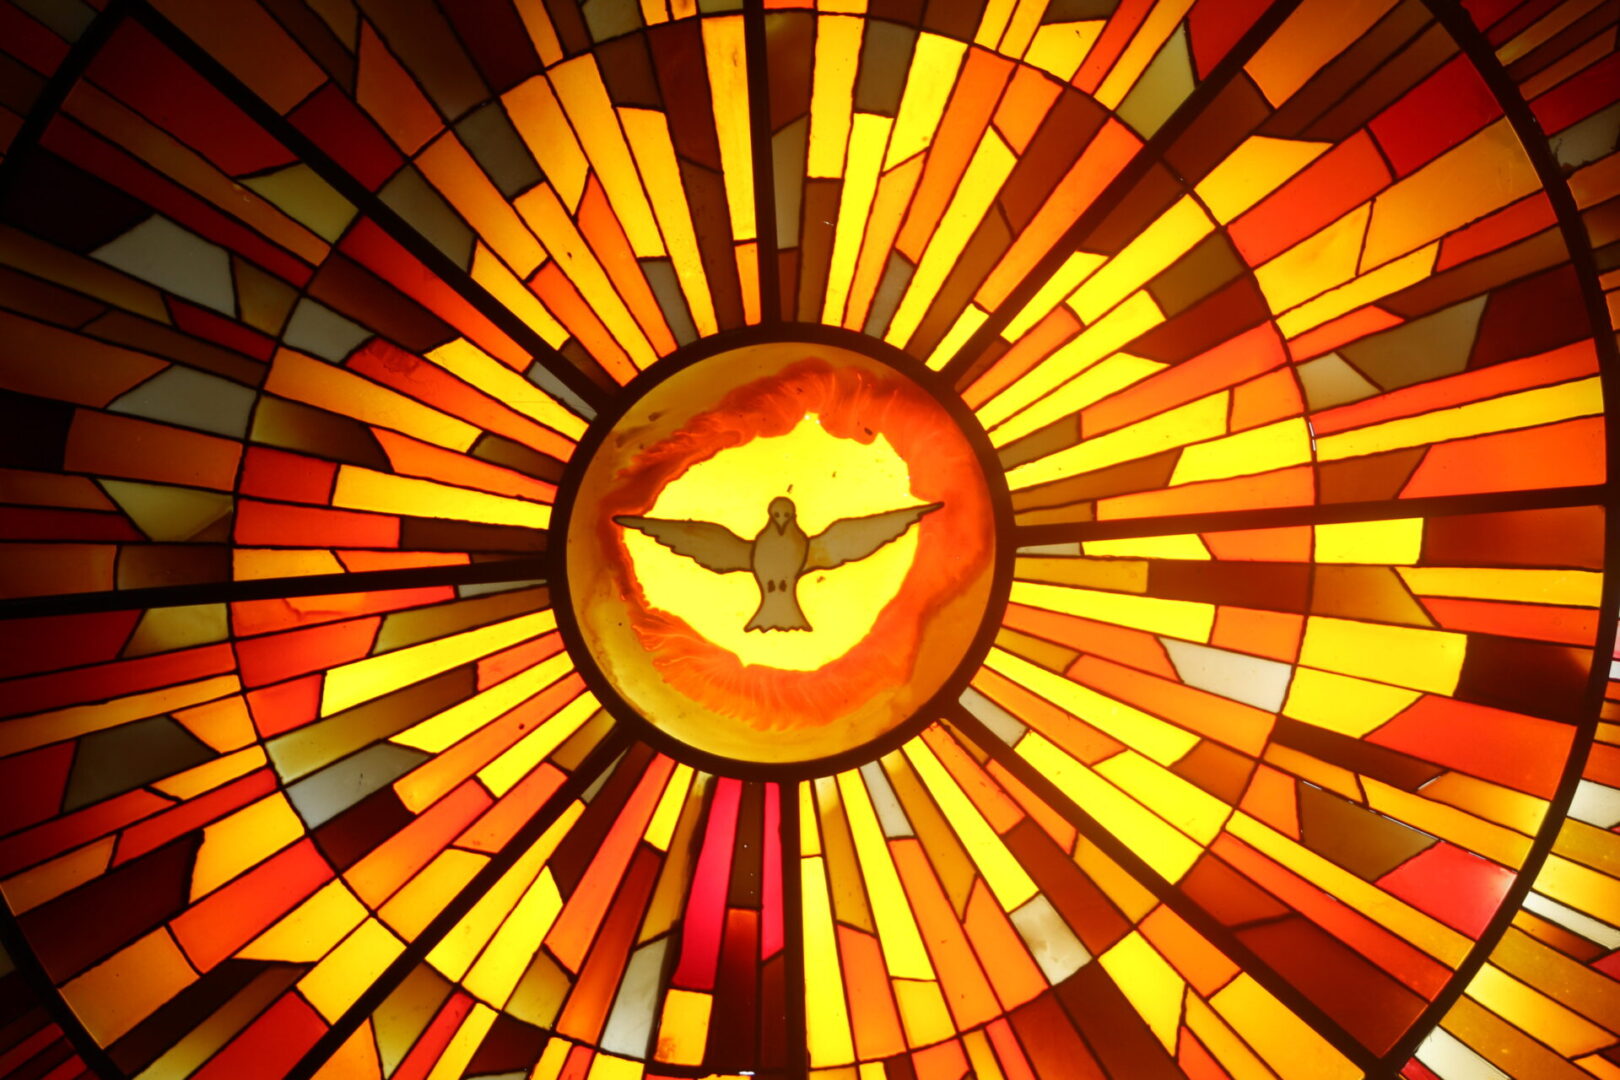 Holy Spirit, the advocate